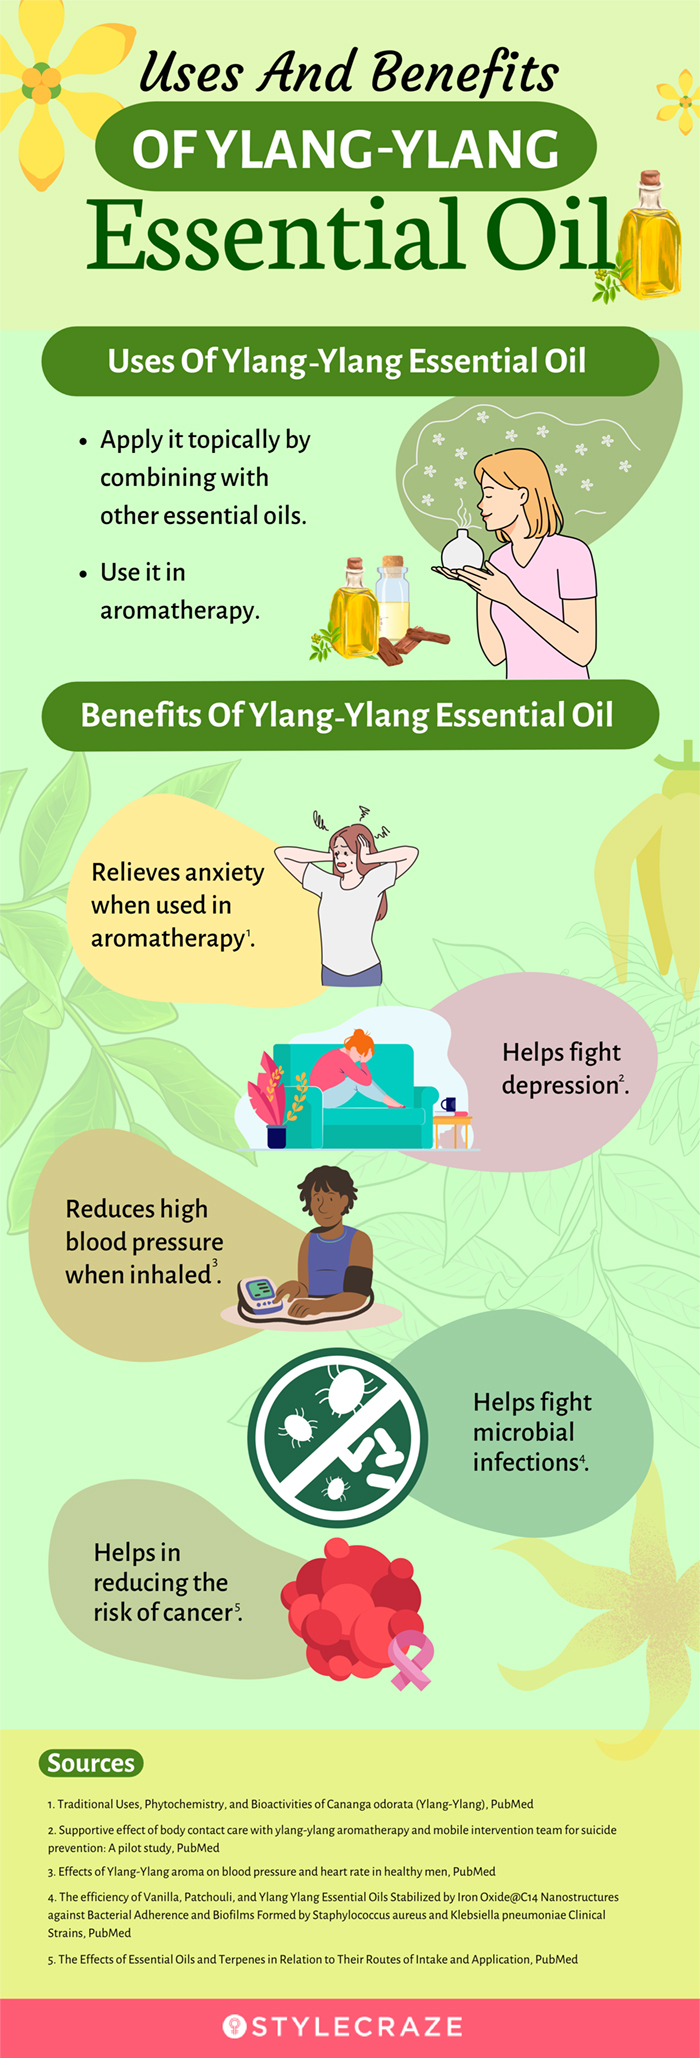 uses and benefits of ylang ylang [infographic]